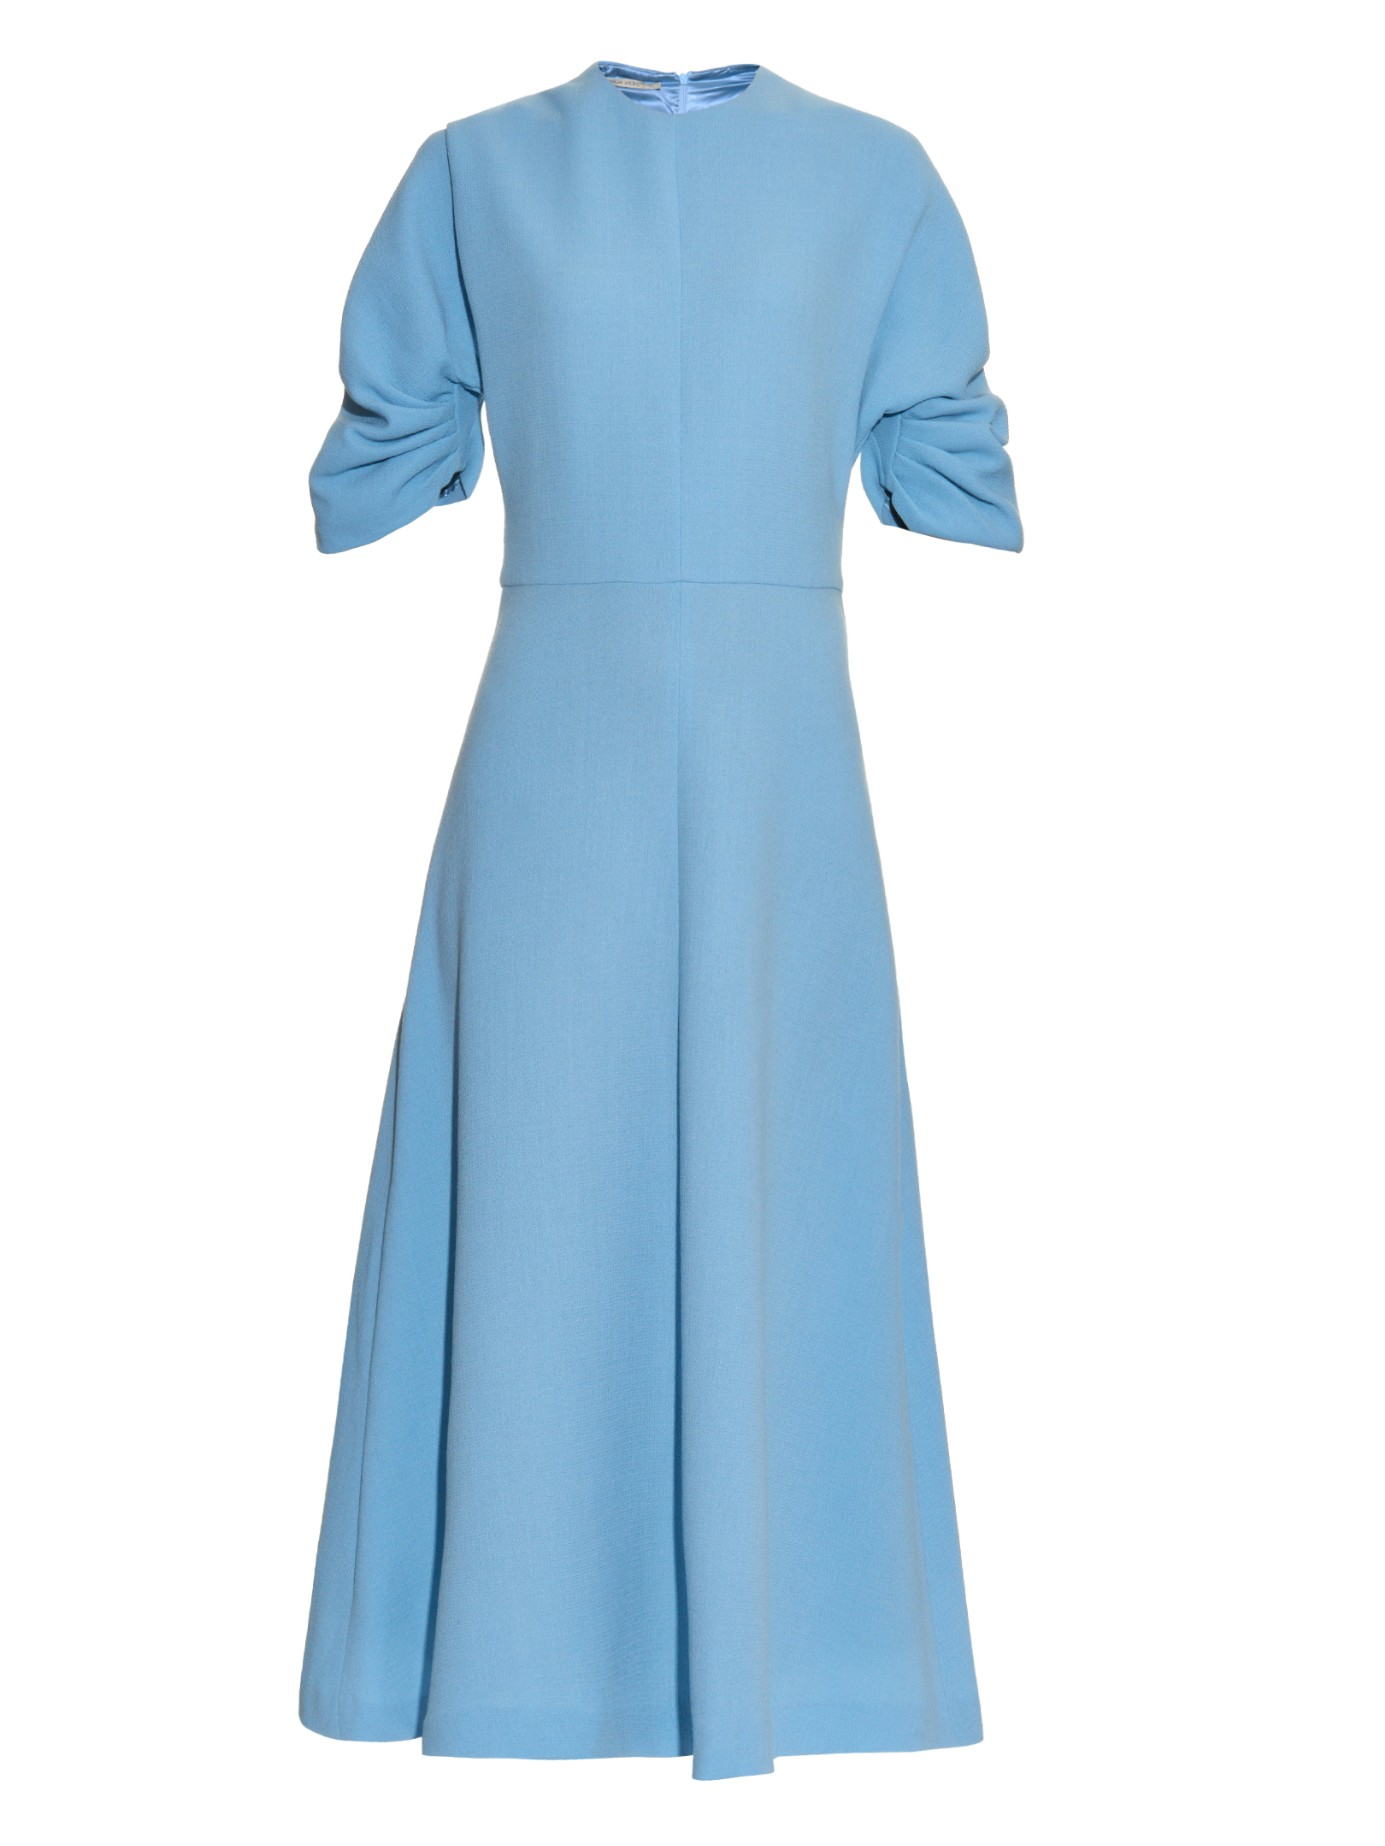 Lyst - Emilia Wickstead Dana Gathered-sleeve Wool-crepe Dress in Blue